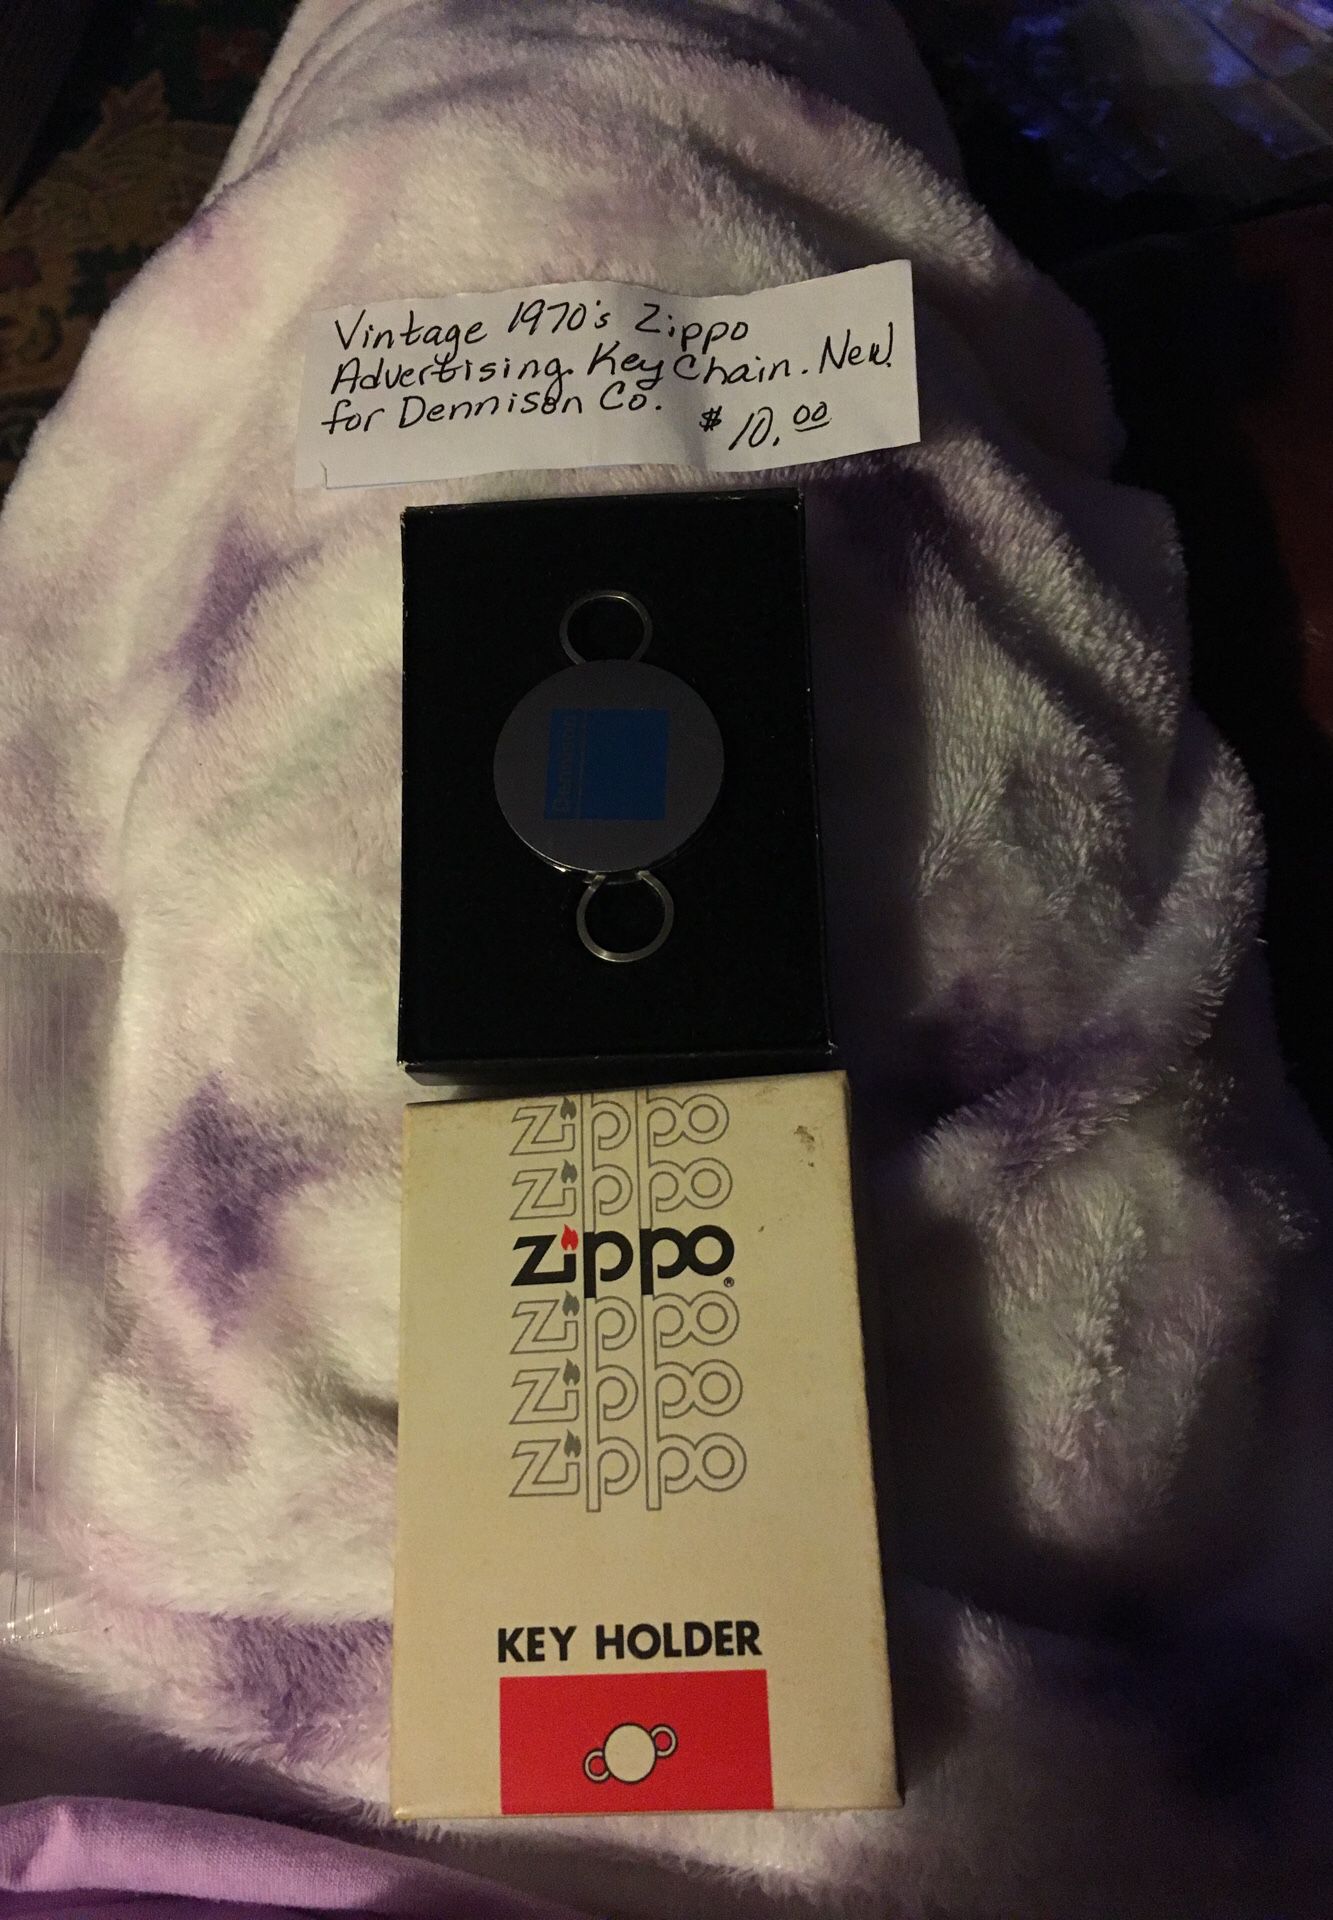 Vintage 1970’s Zippo Advertising Keychain